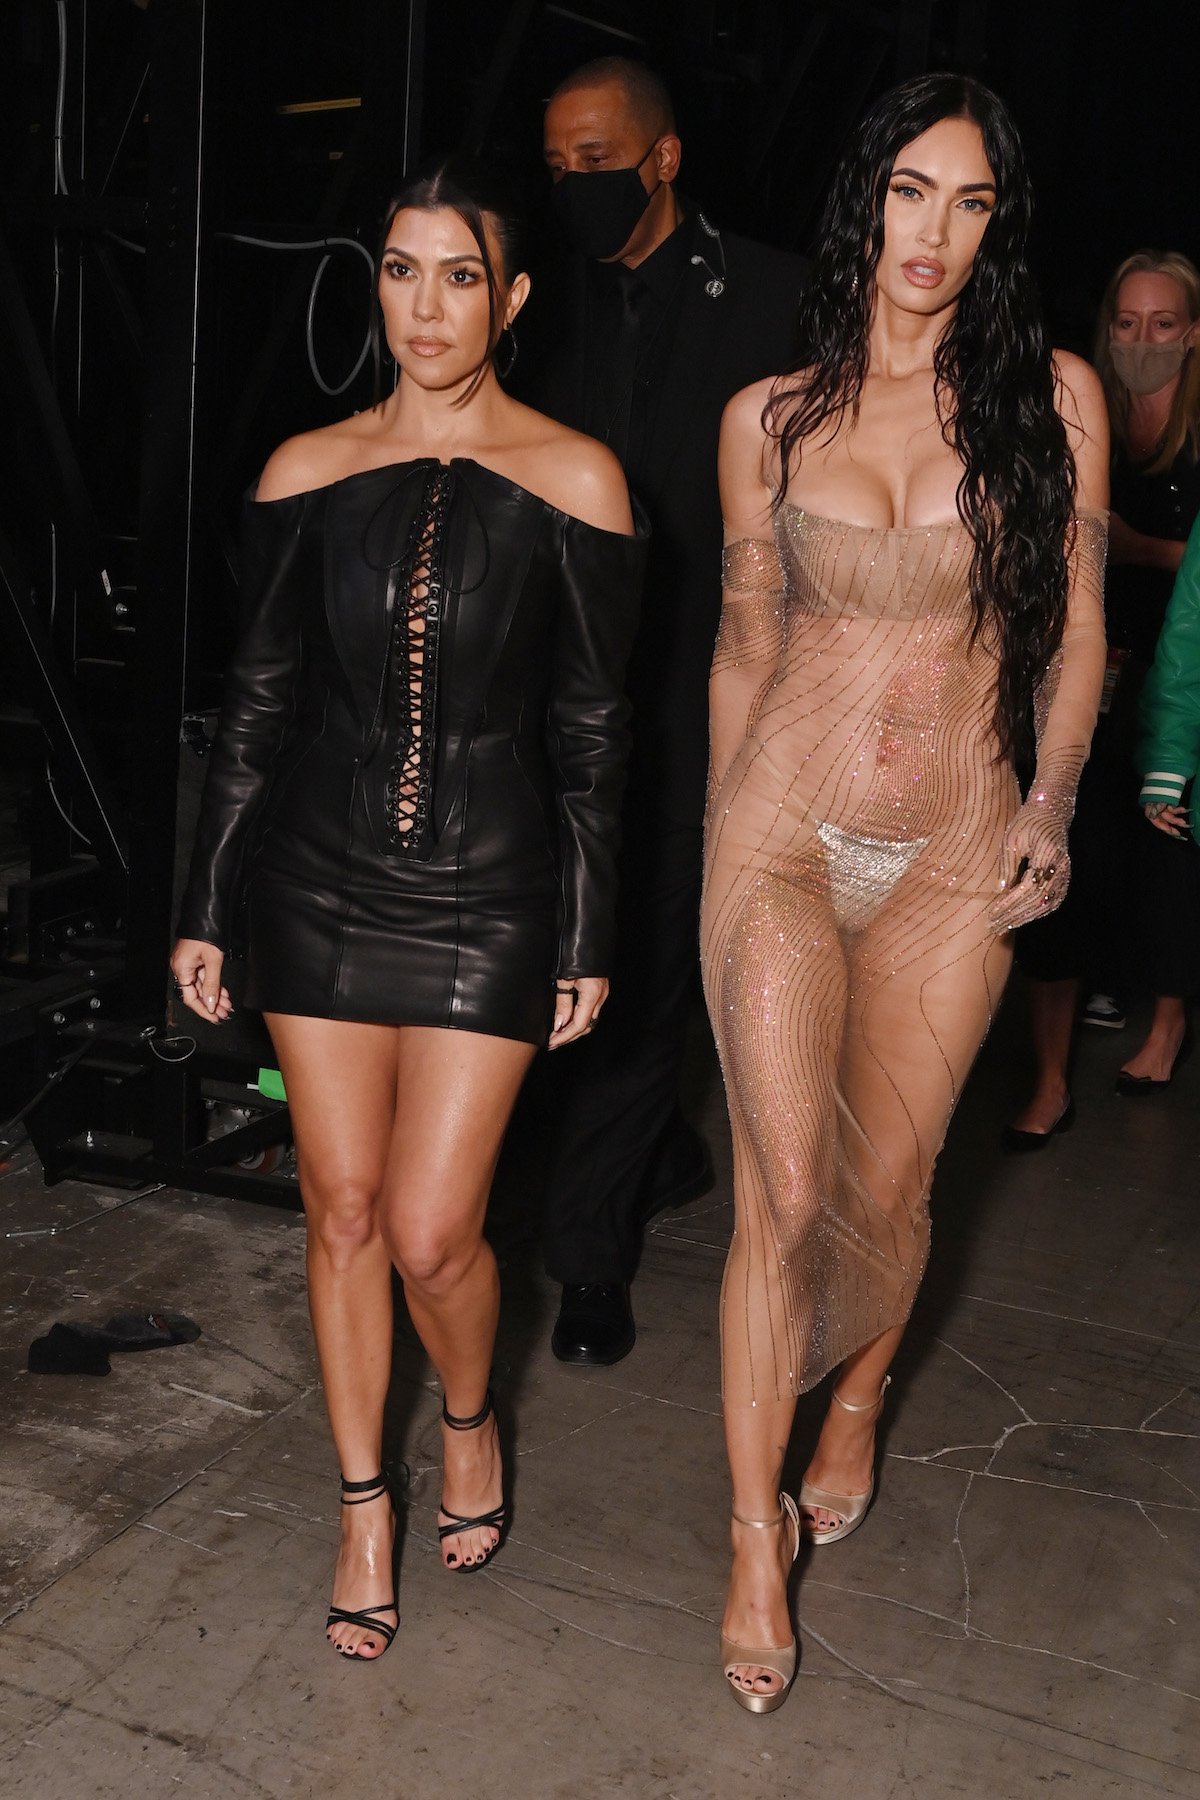 Kourtney Kardashian and Megan Fox walk together at the 2021 MTV VMAs.